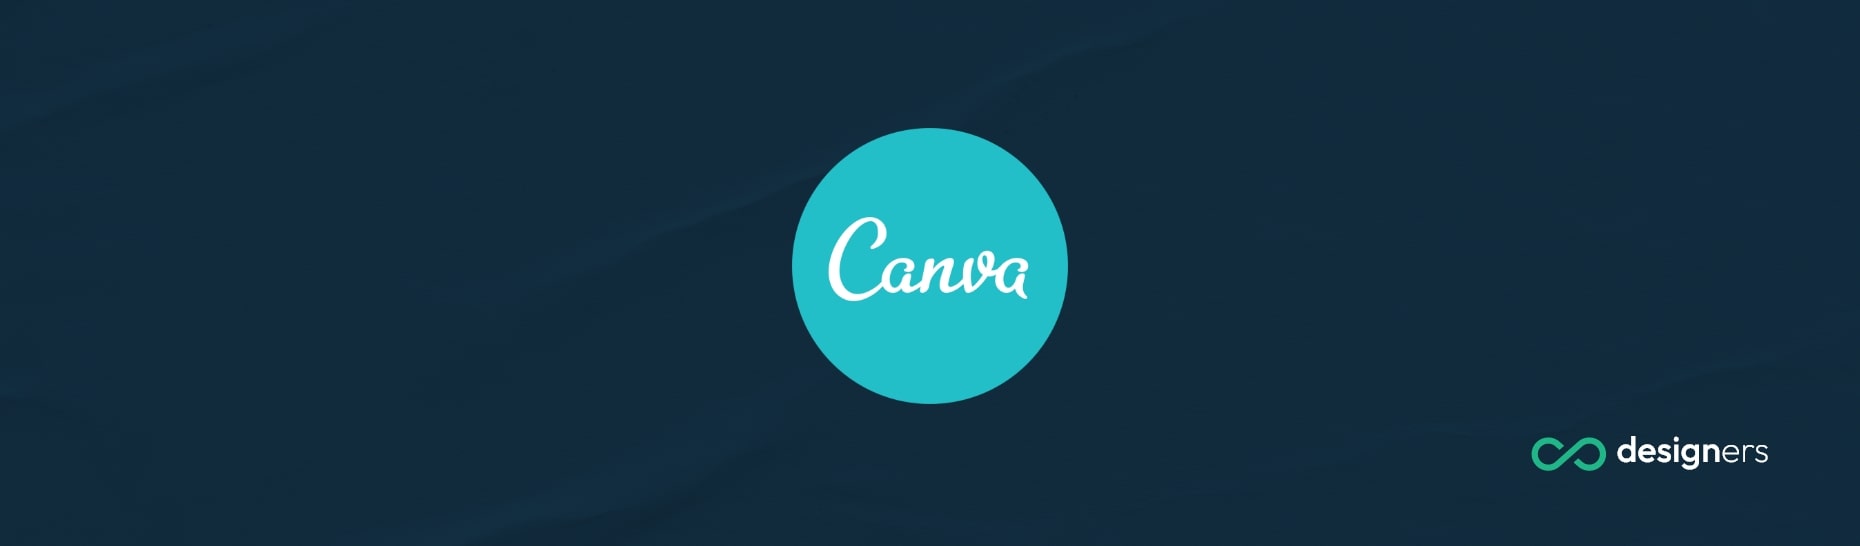 How Do You Make a Tumbler Design in Canva?